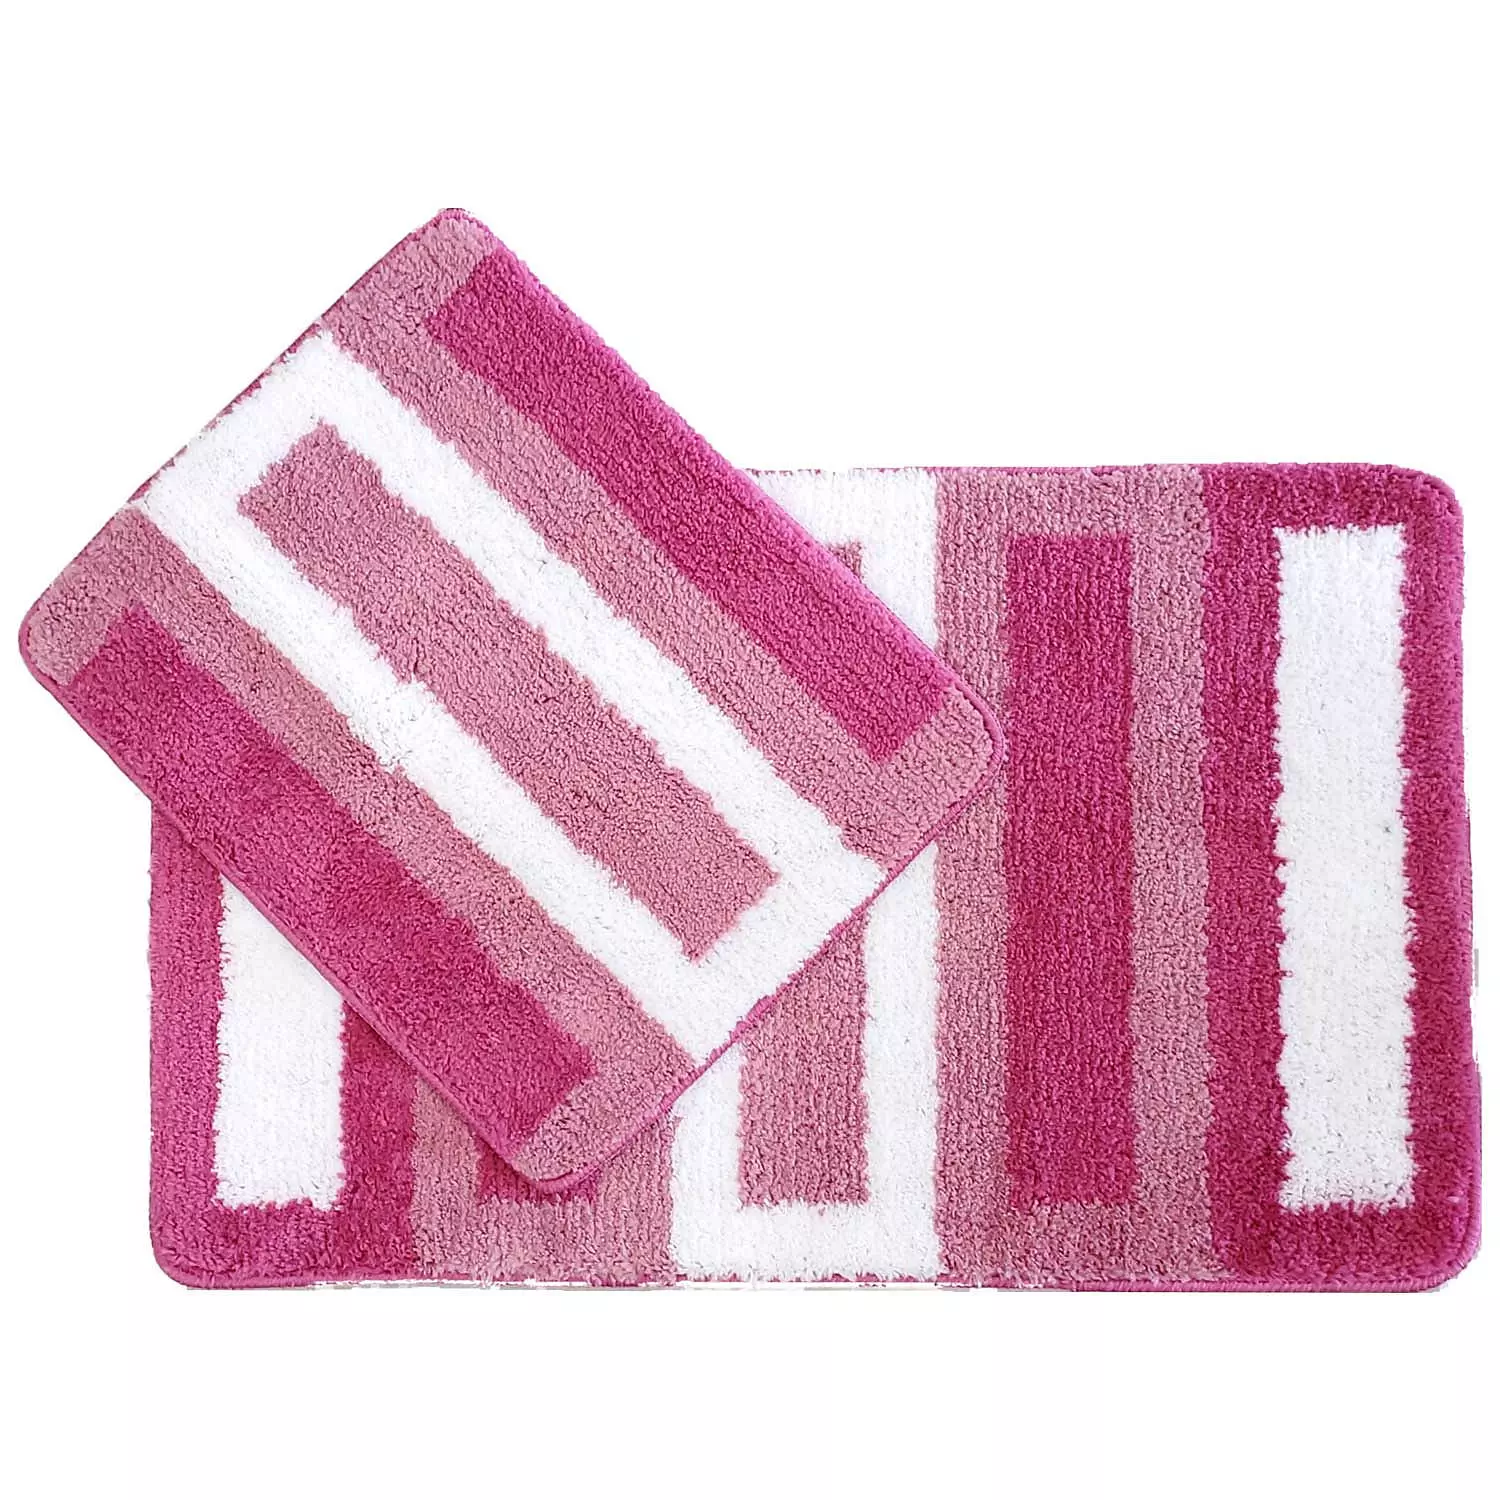 Epicurns, set of 2 bath rugs, pink